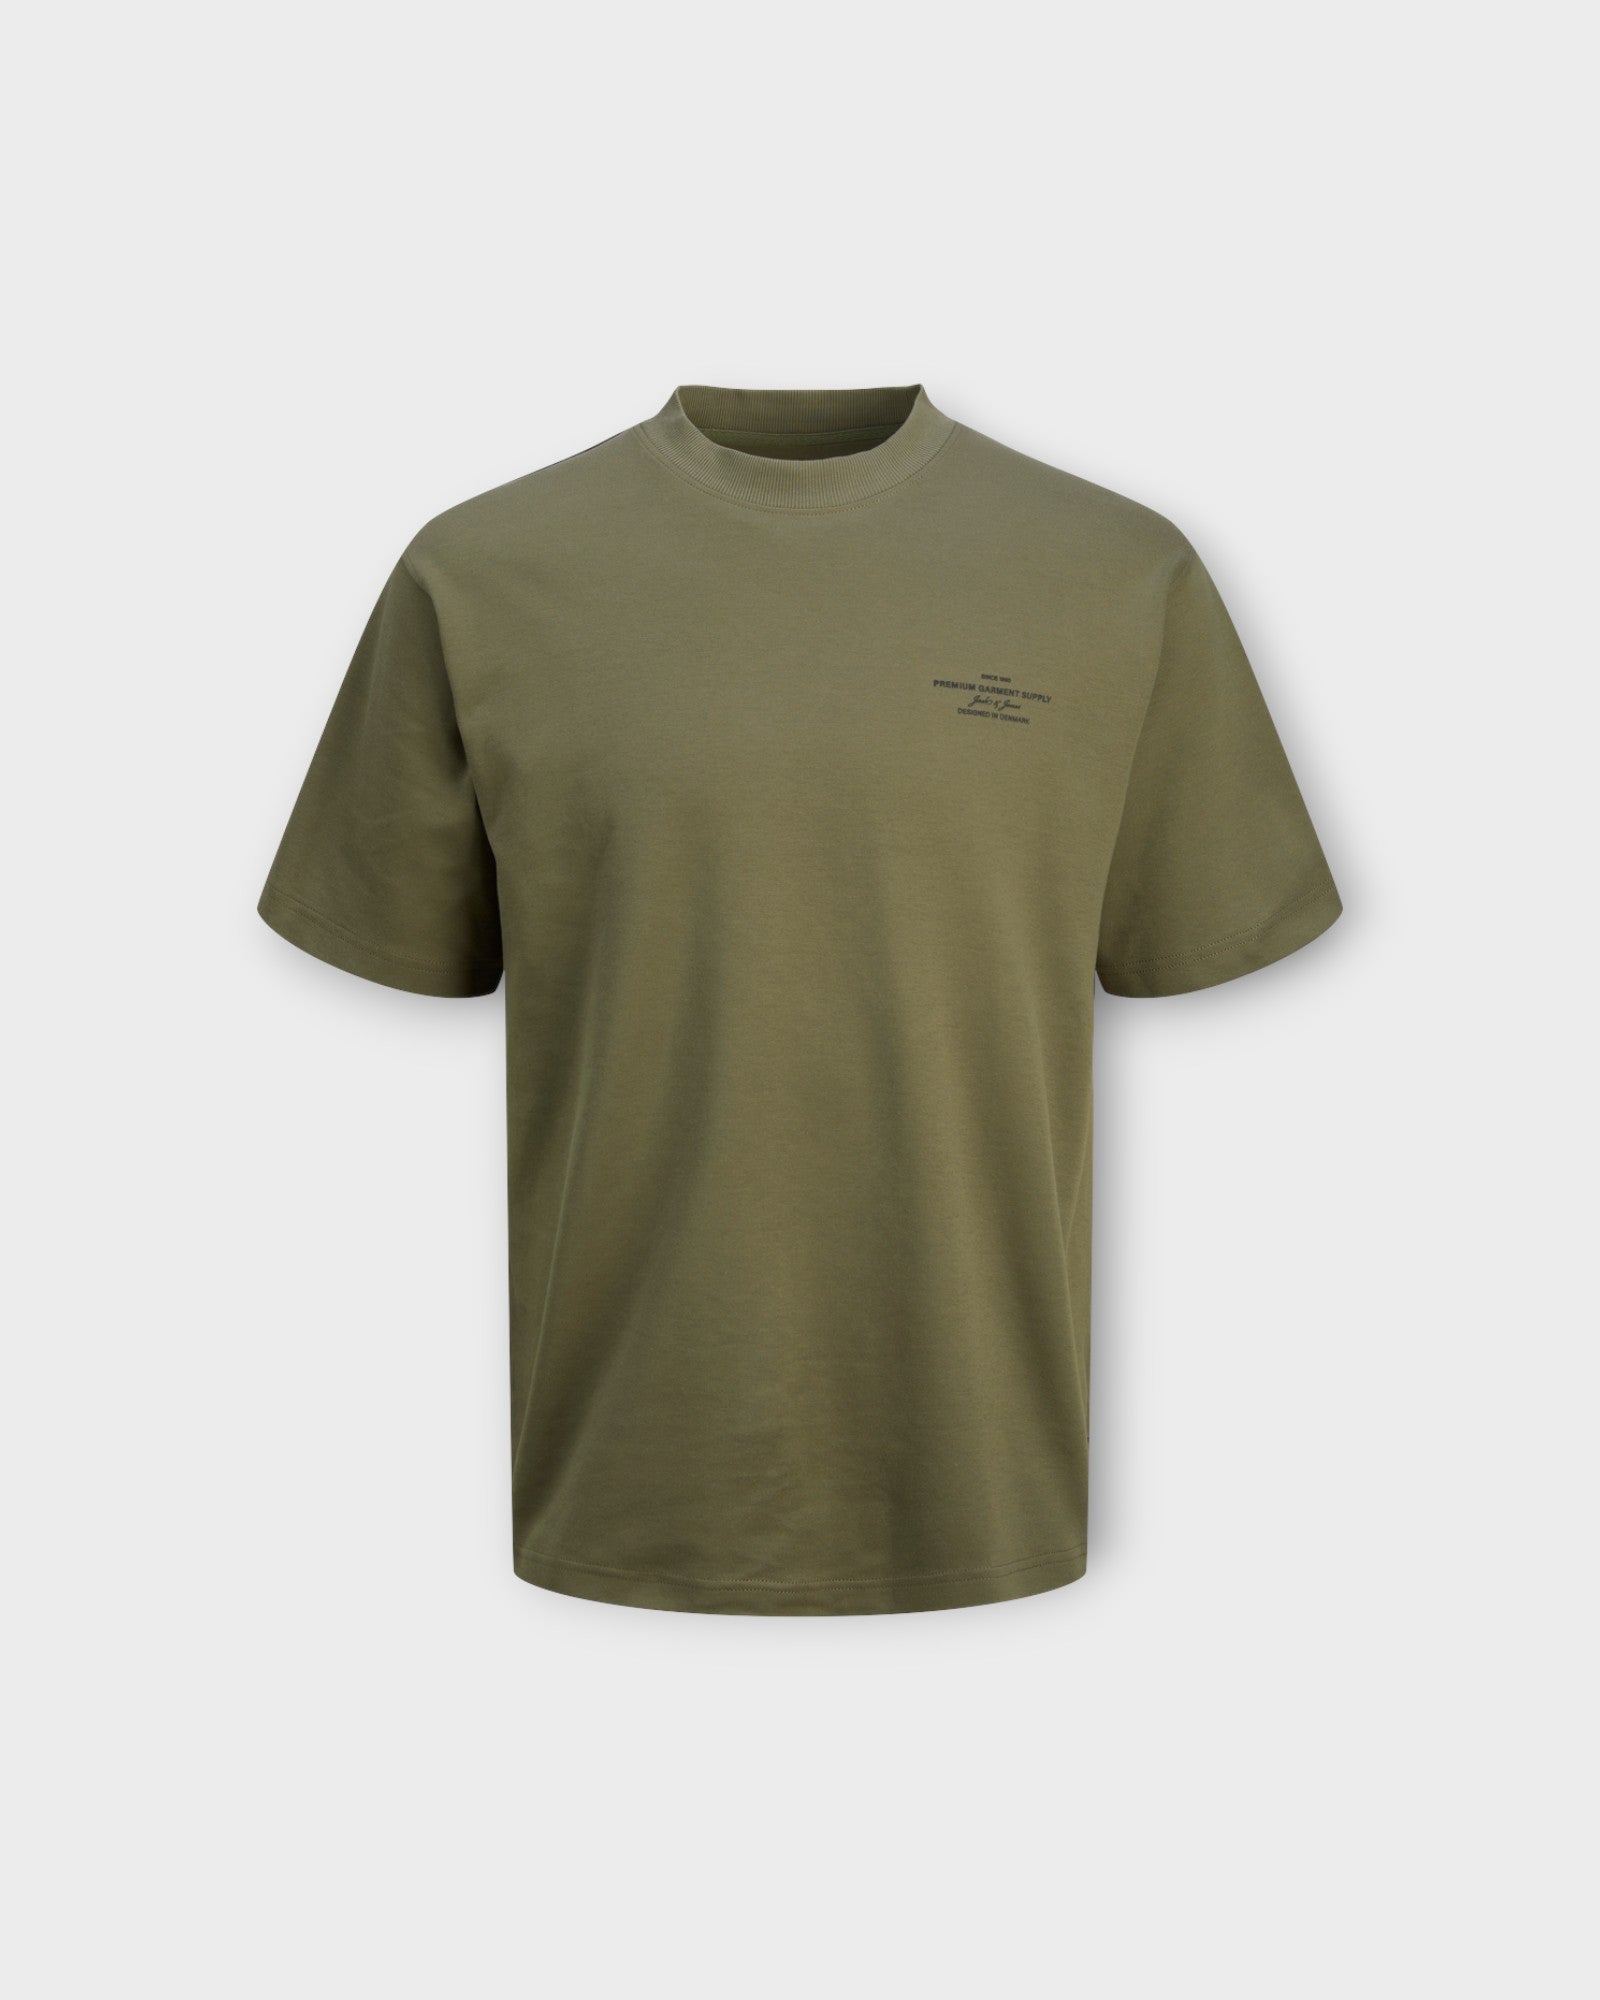 Blachad Branding SS Crew Neck Tee Sea Turtle - army grøn Jack and Jones T-shirt til Mænd. Her set forfra.